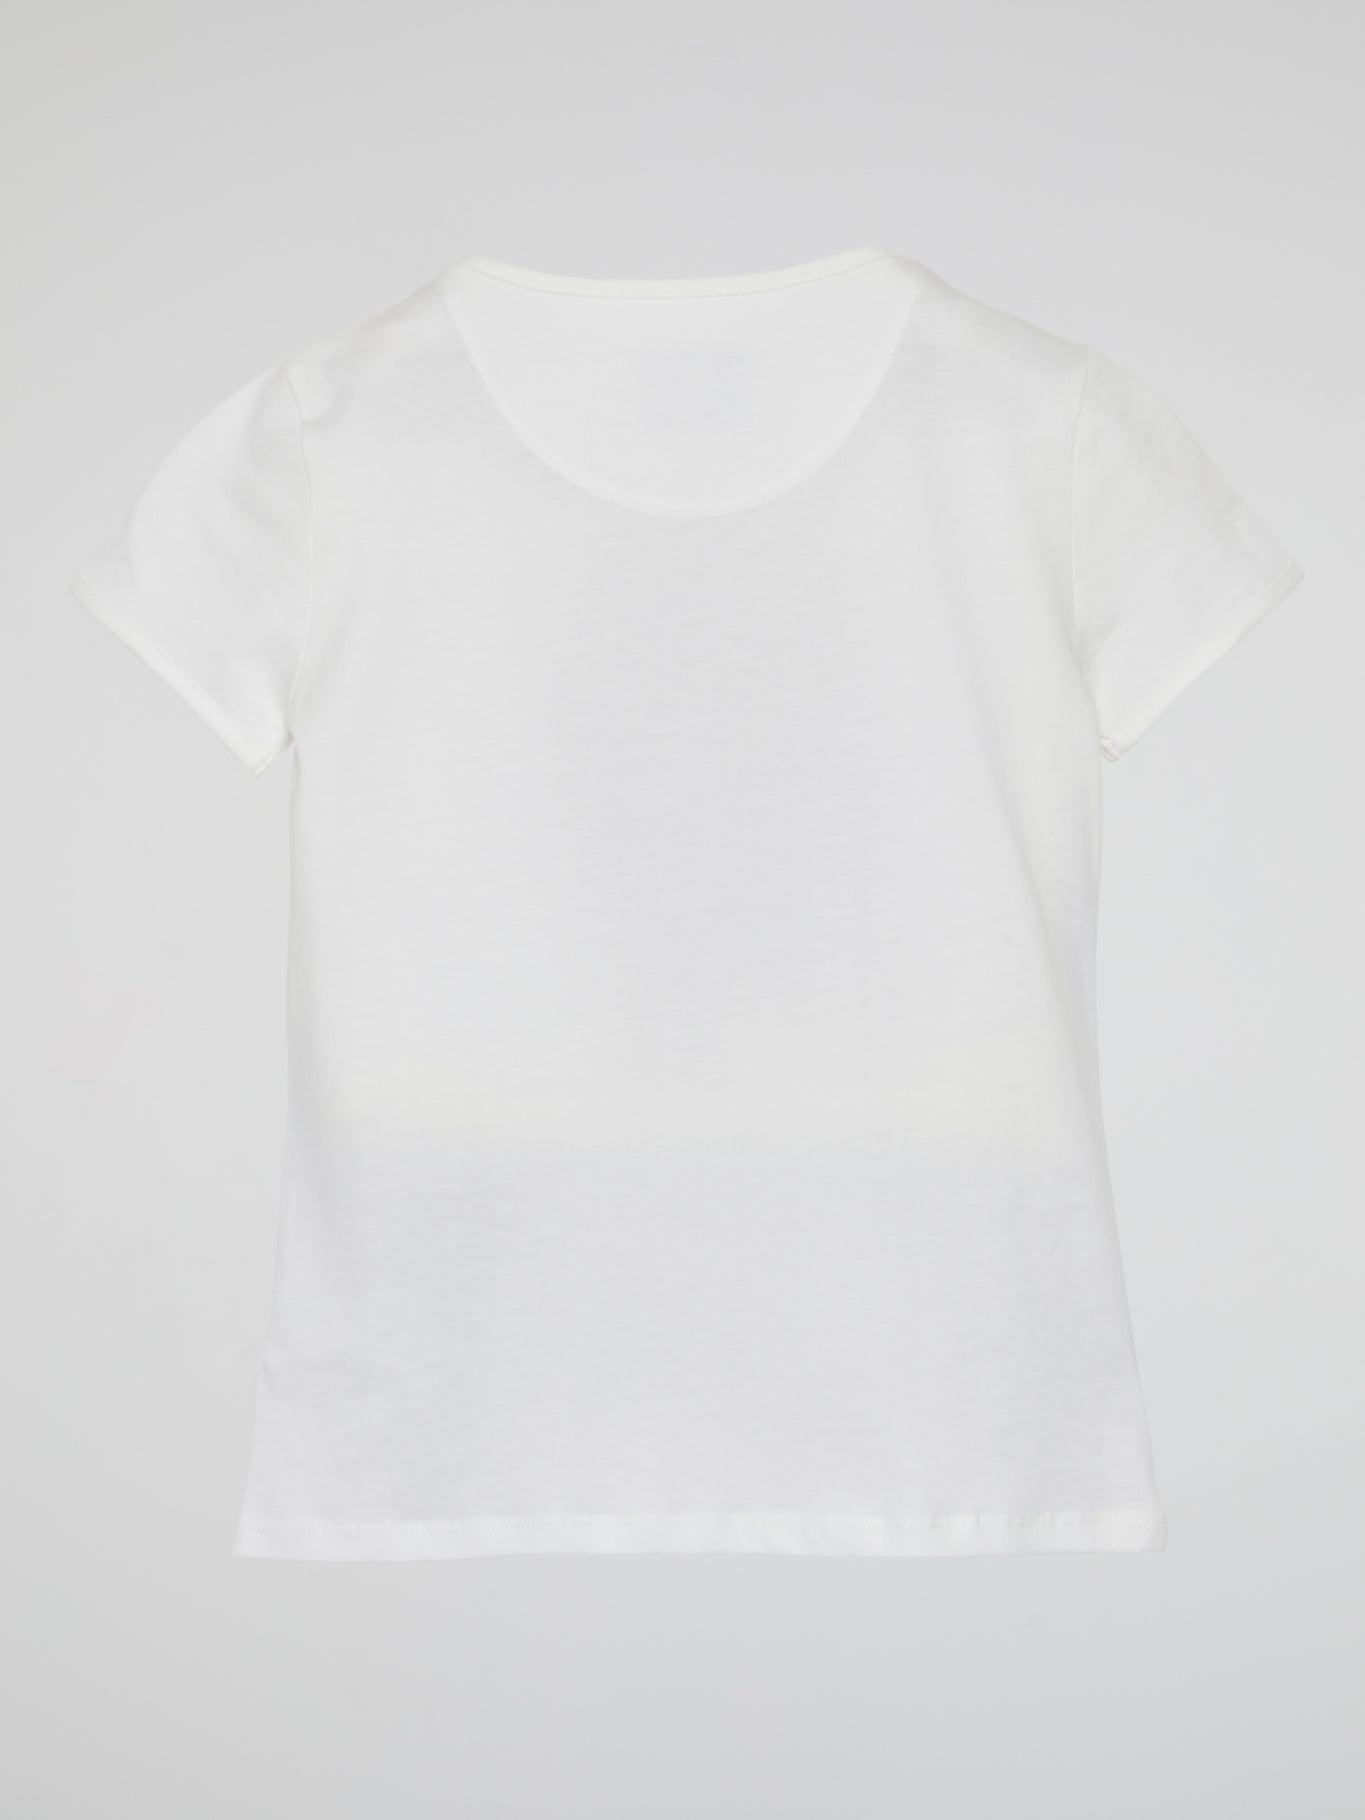 Bad Girl White T-shirt (Kids)